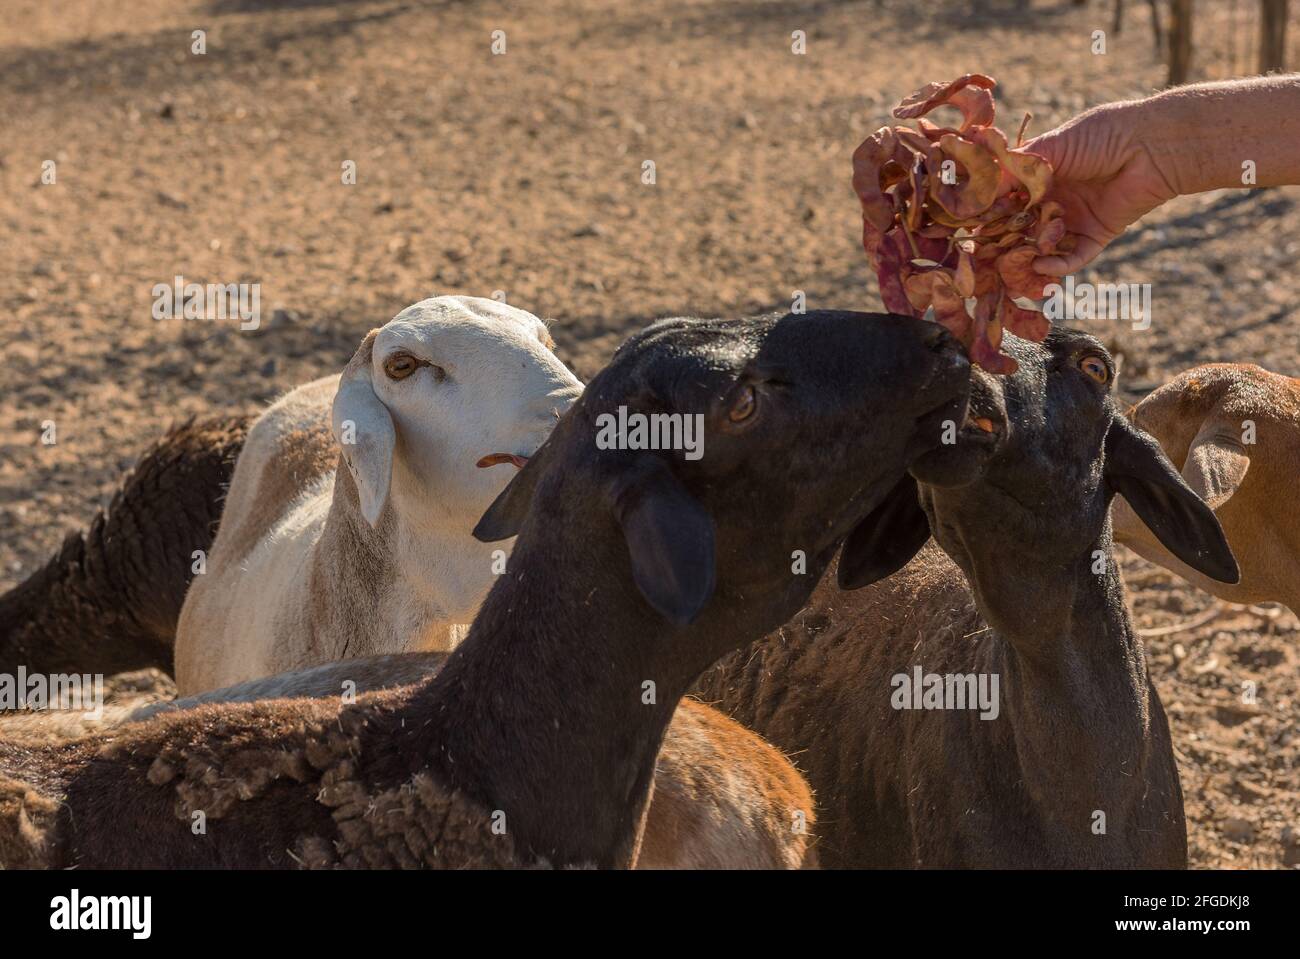 feeding a small flock of sheep, Namibia Stock Photo